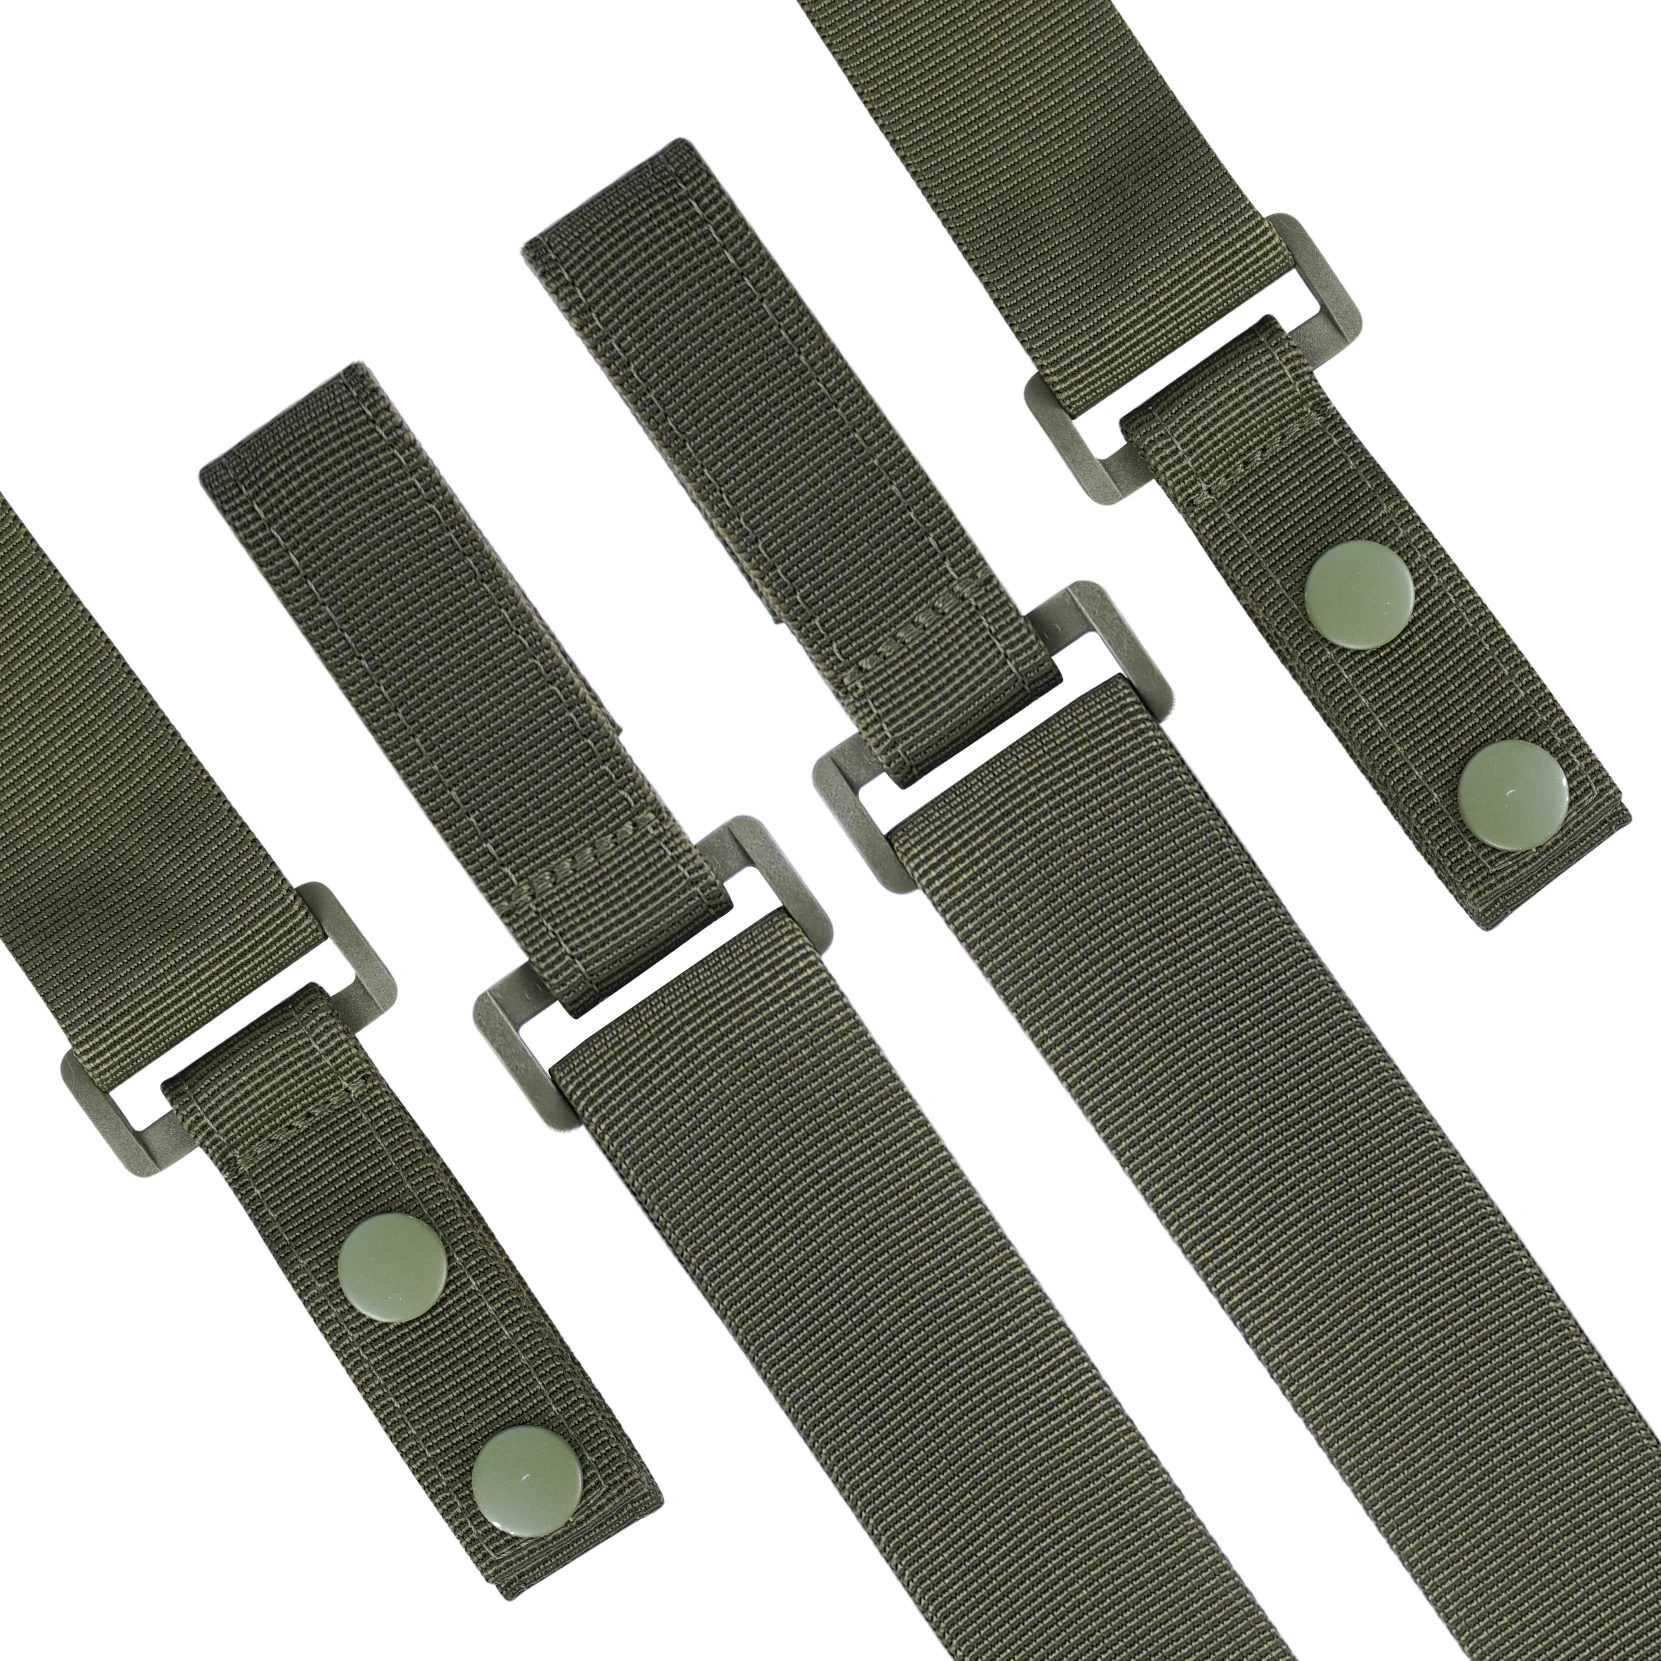 AISENIN Nylon Police Suspenders for Duty Belt Adjustable Tactical